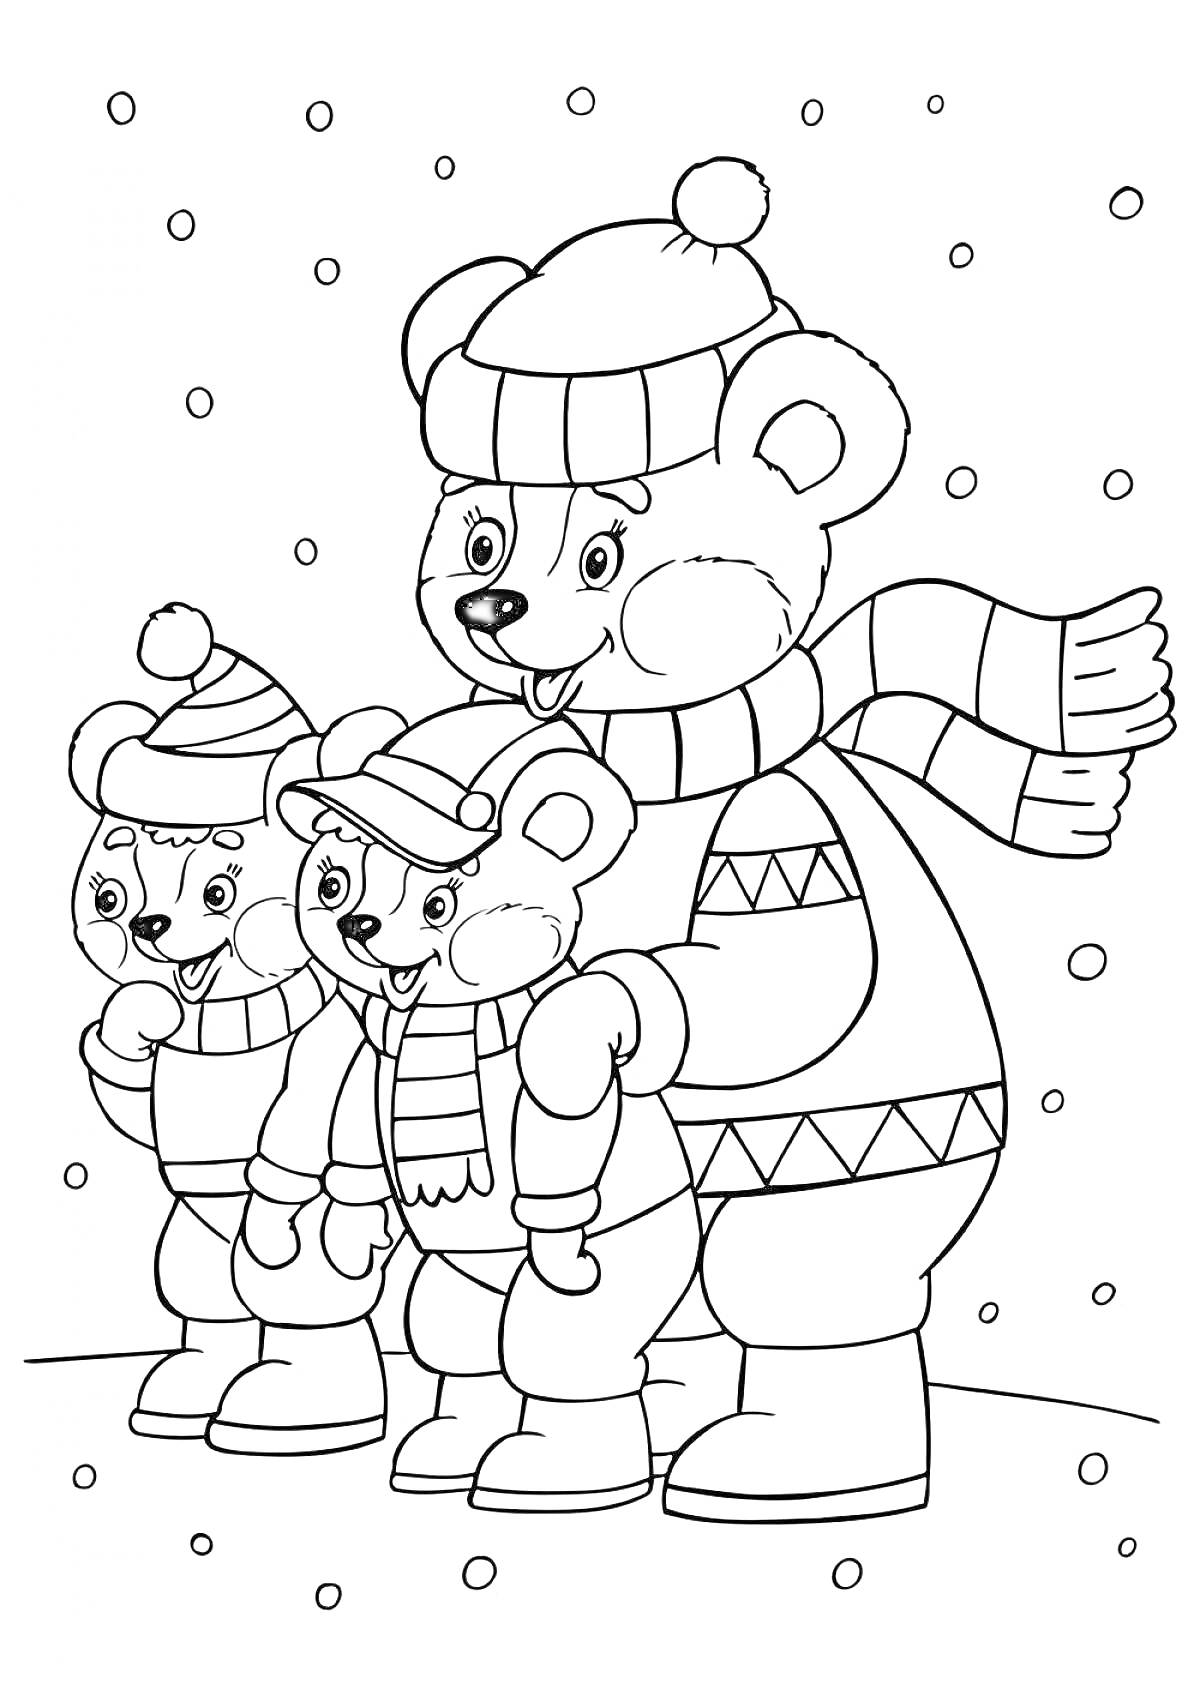 На раскраске изображено: Зима, Снег, Холод, Снежинки, Семейная сцена, Для детей, Шарф, Медведь, Шапка, Варежка